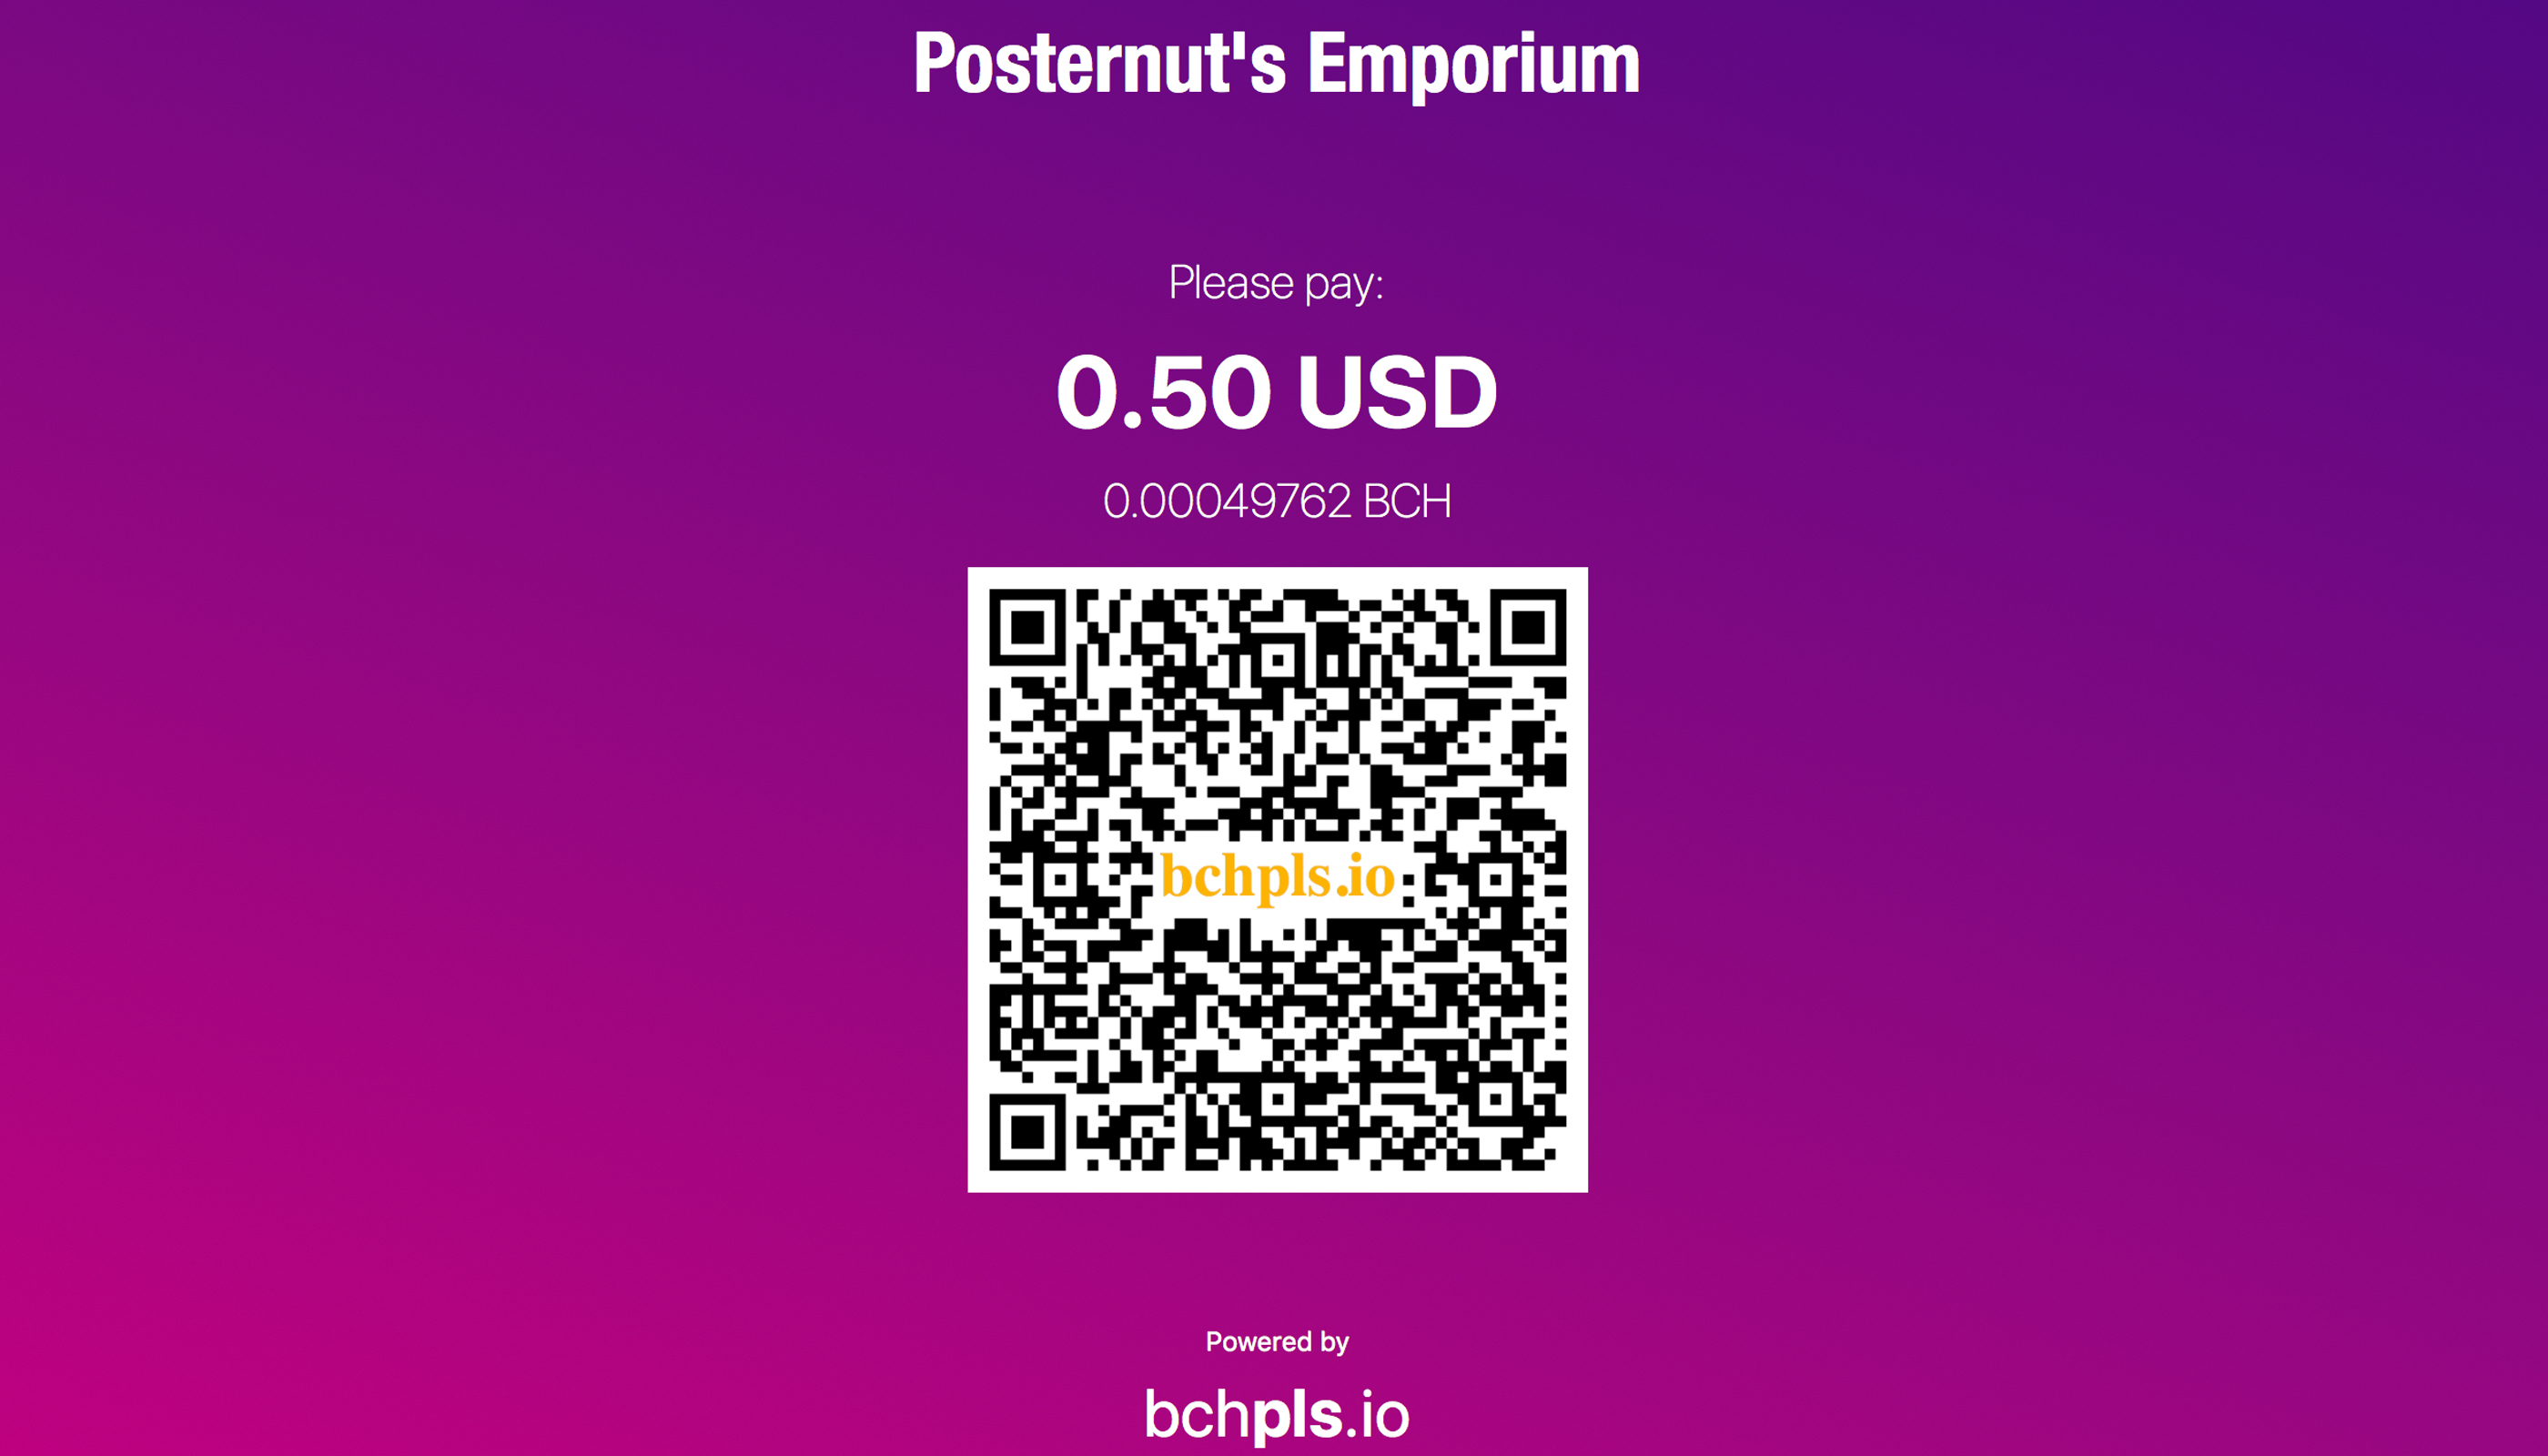 Bchpls.io Enables Free Bitcoin Cash Point-of-Sale Platform 